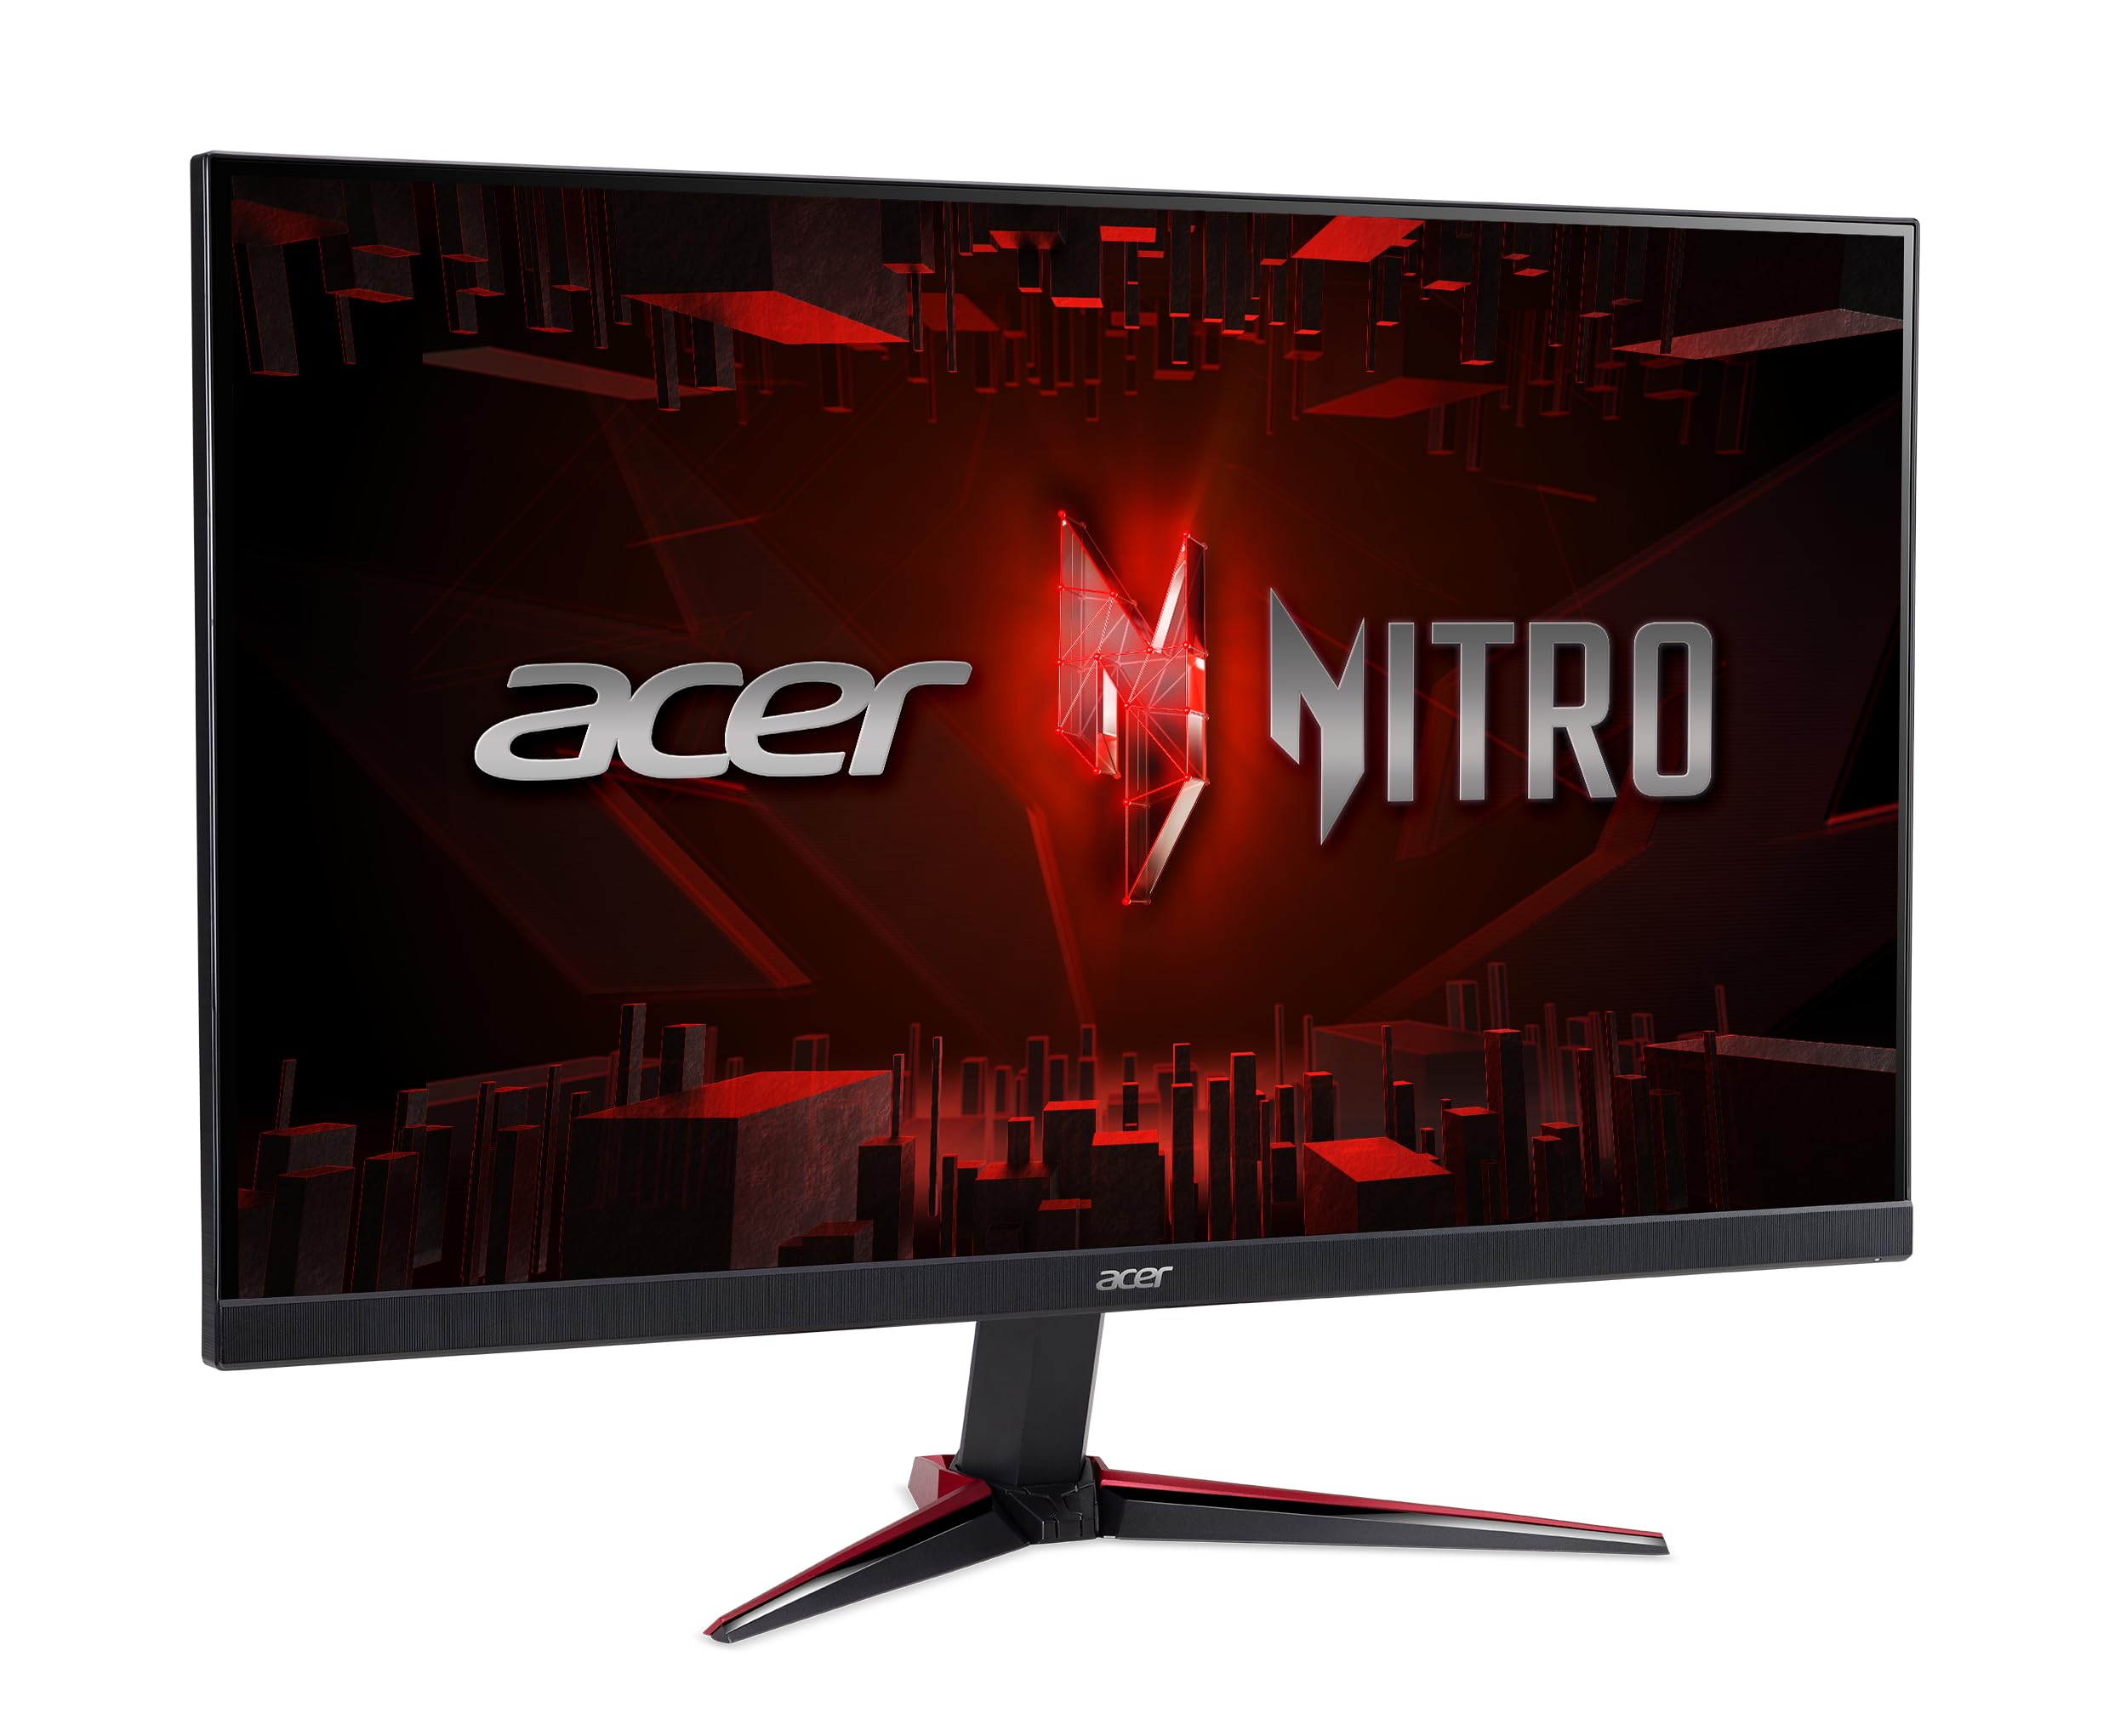 Acer Nitro 27" Full HD 1920 x 1080 PC Gaming IPS Monitor | AMD FreeSync Premium | 180Hz Refresh | Up to 0.5ms | HDR10 Support | 99% sRGB | 1 x Display Port 1.2 & 2 x HDMI 2.0 | VG270 M3bmiipx